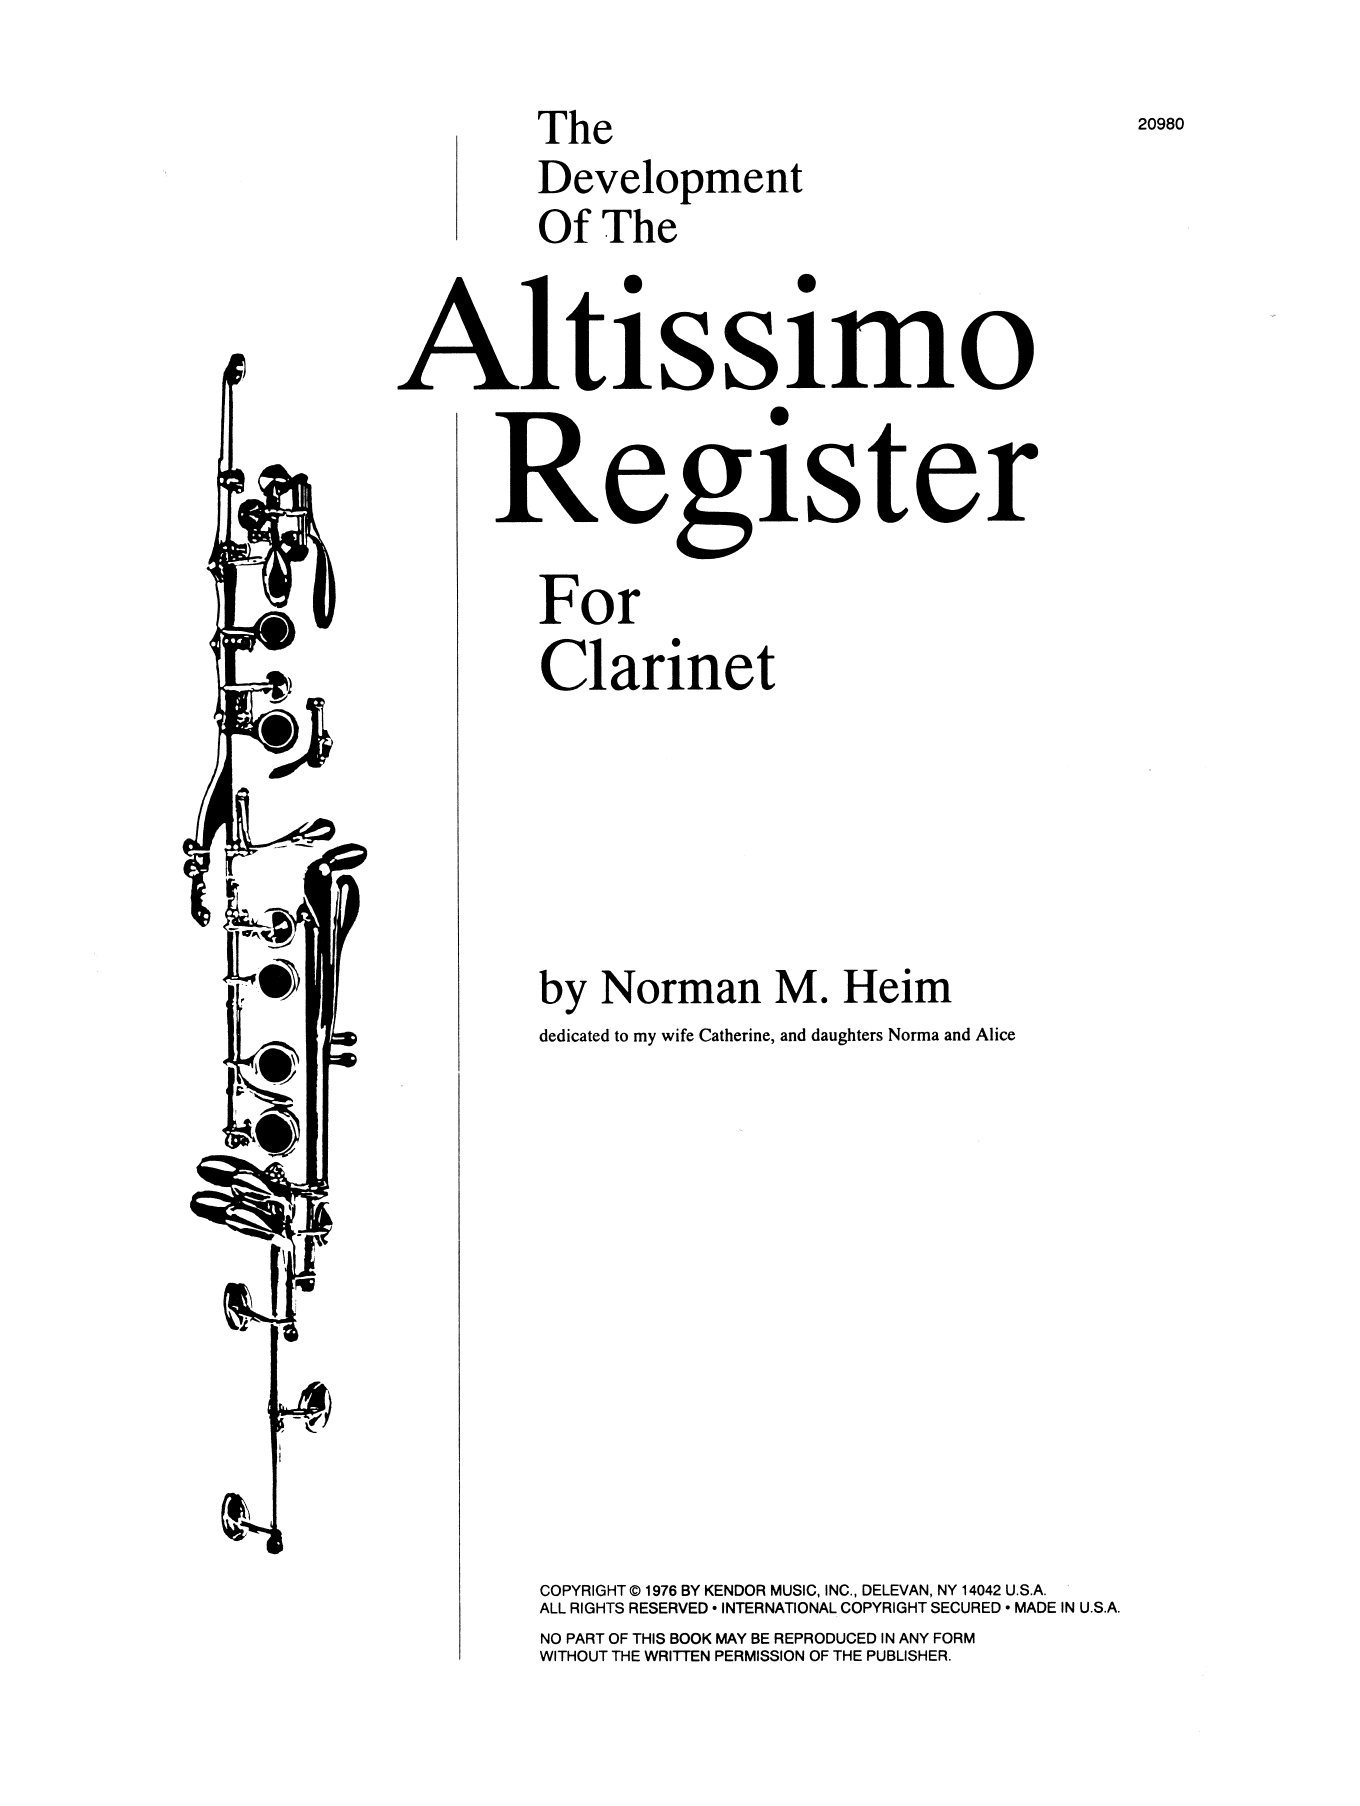 Download Norman Heim The Development Of The Altissimo Regist Sheet Music